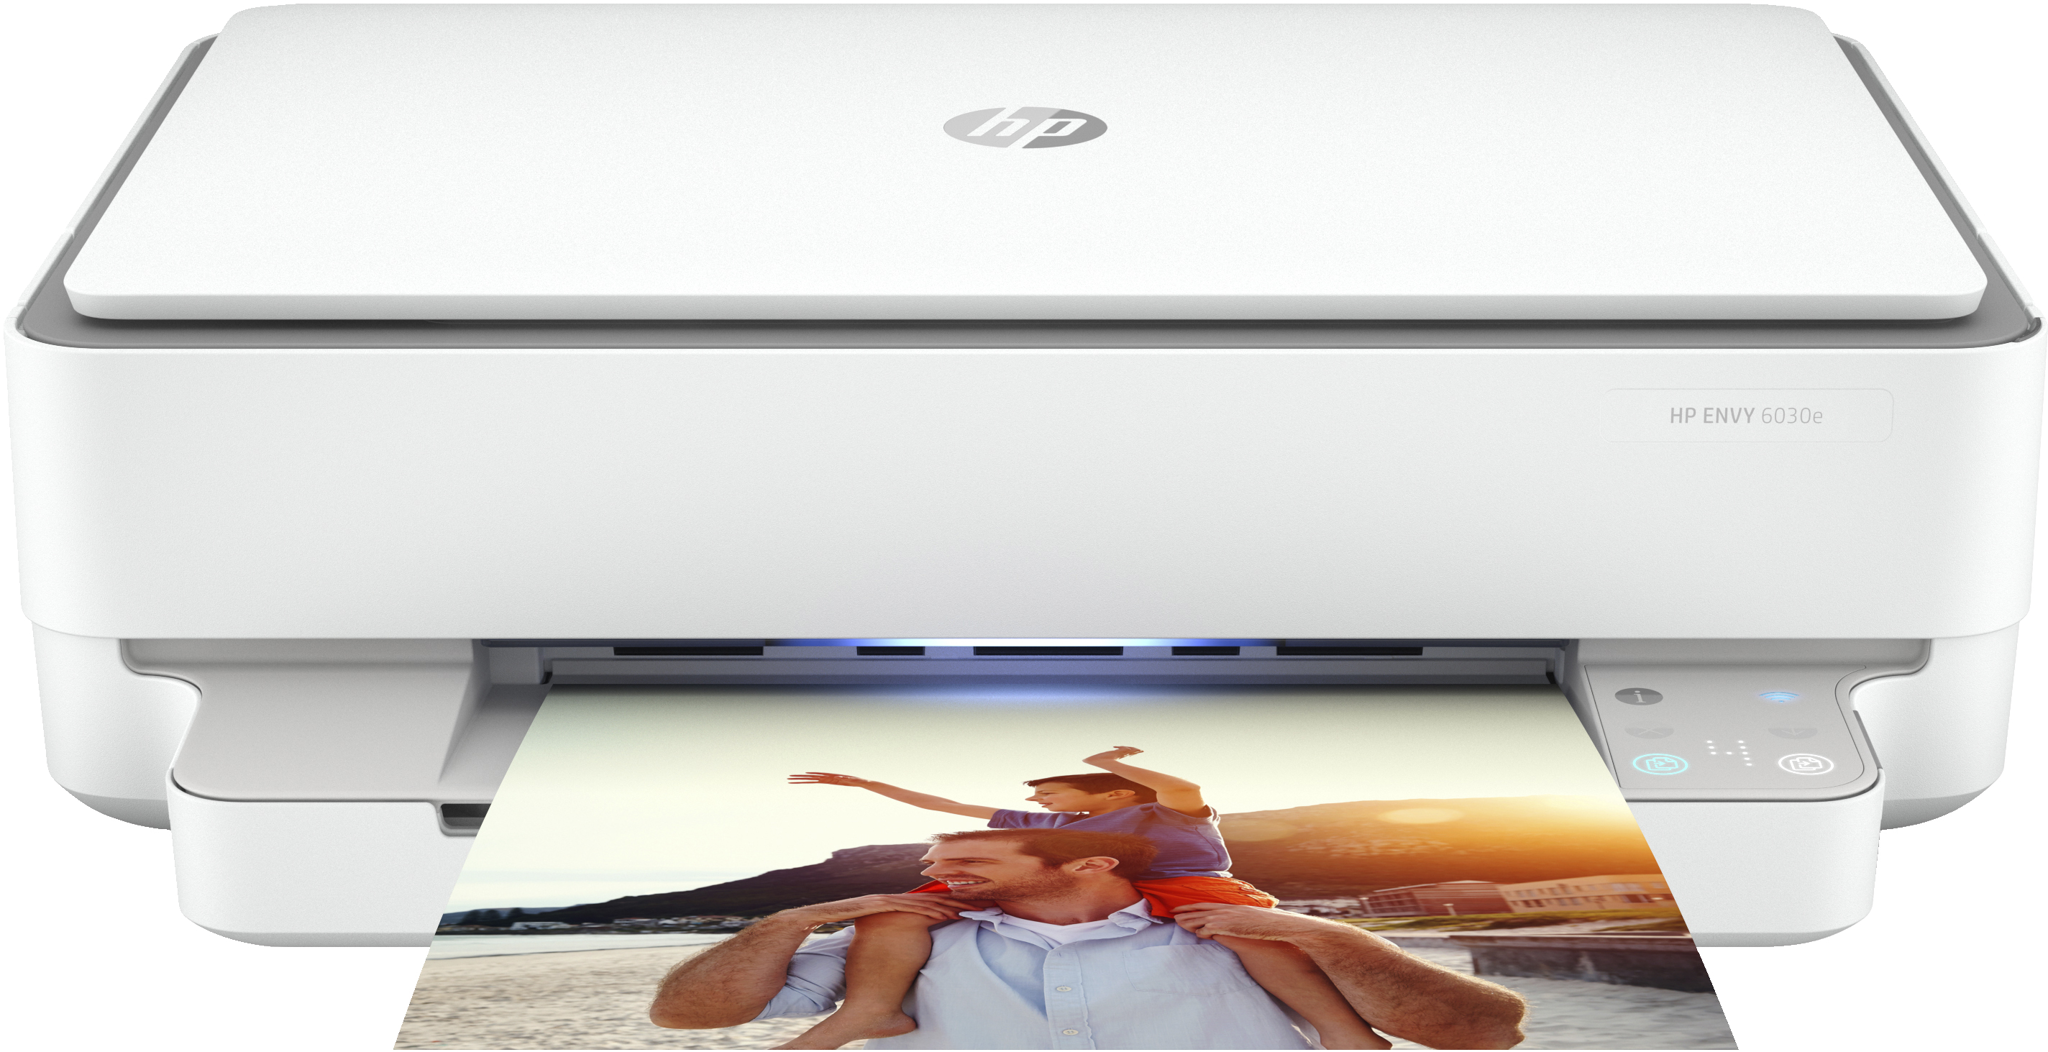 Bild von HP ENVY 6030e - Thermal Inkjet - Farbdruck - 4800 x 1200 DPI - Farbkopieren - A4 - Grau - Weiß